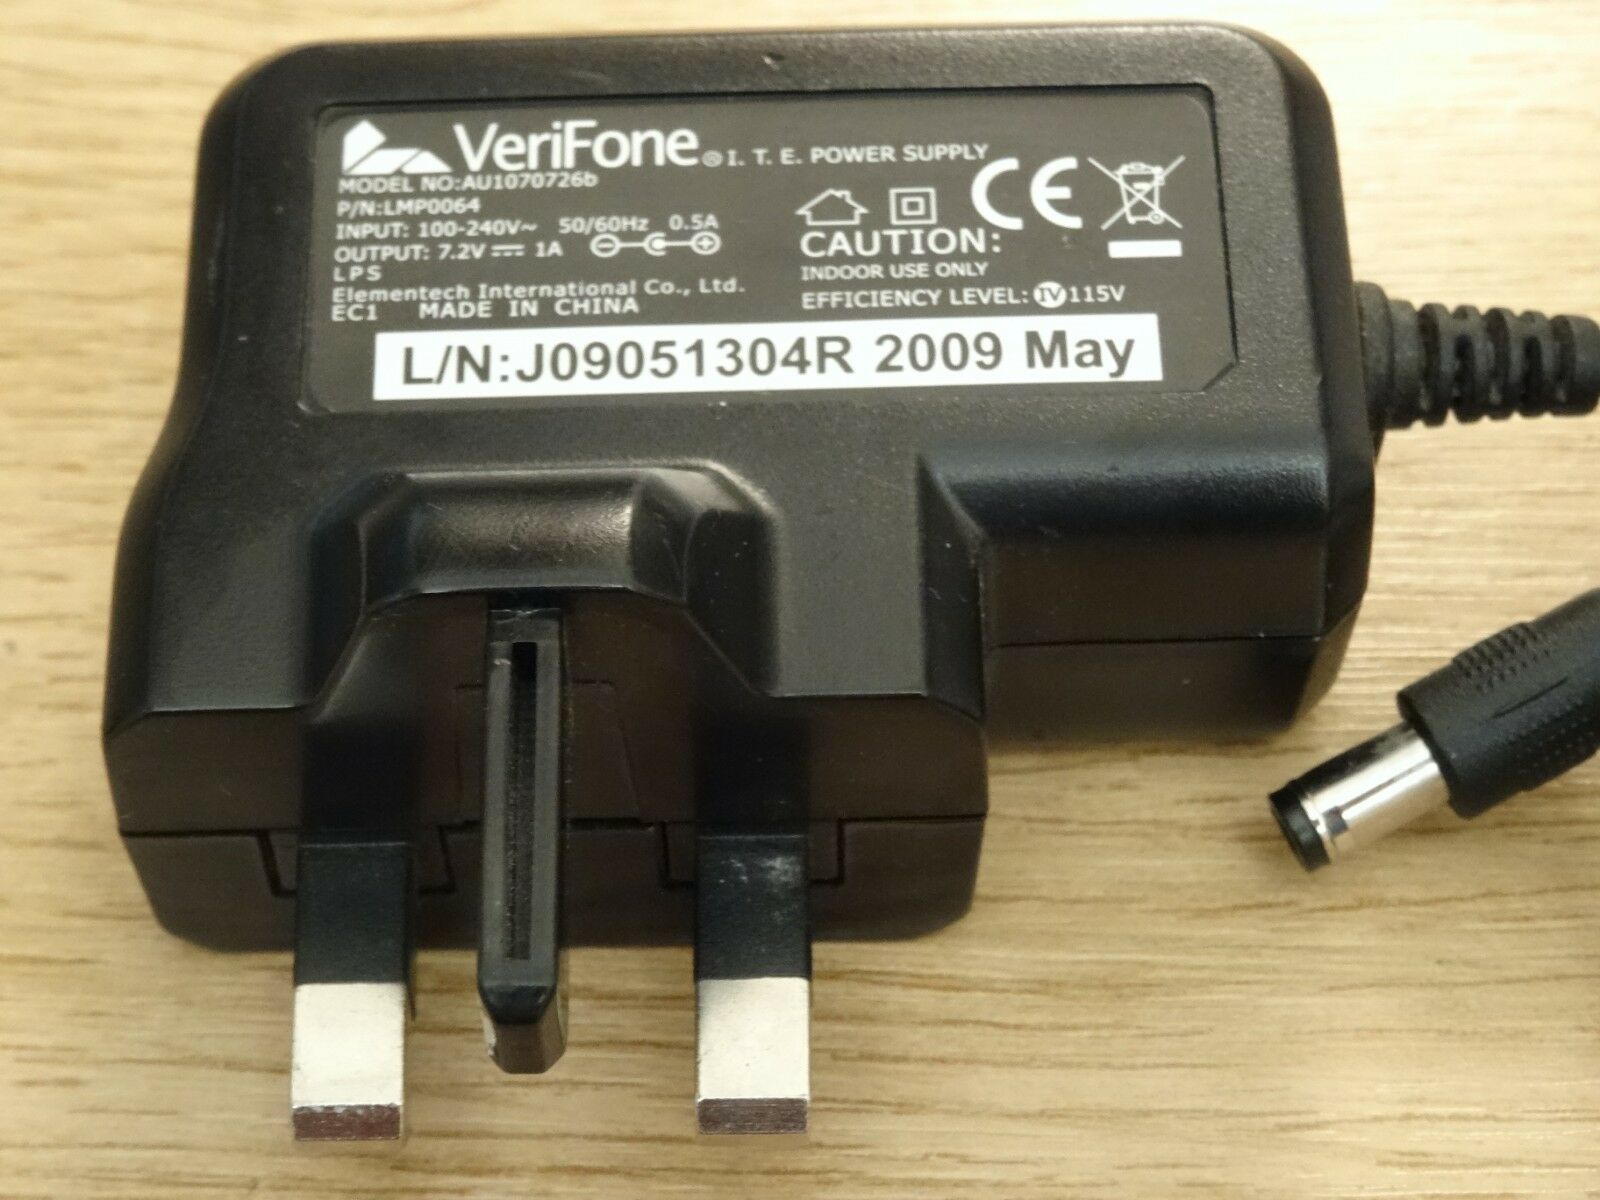 New VeriFone AU1070726b LMP0064 7.2V 1A PSU ADAPTER I.T.E. Power Supply